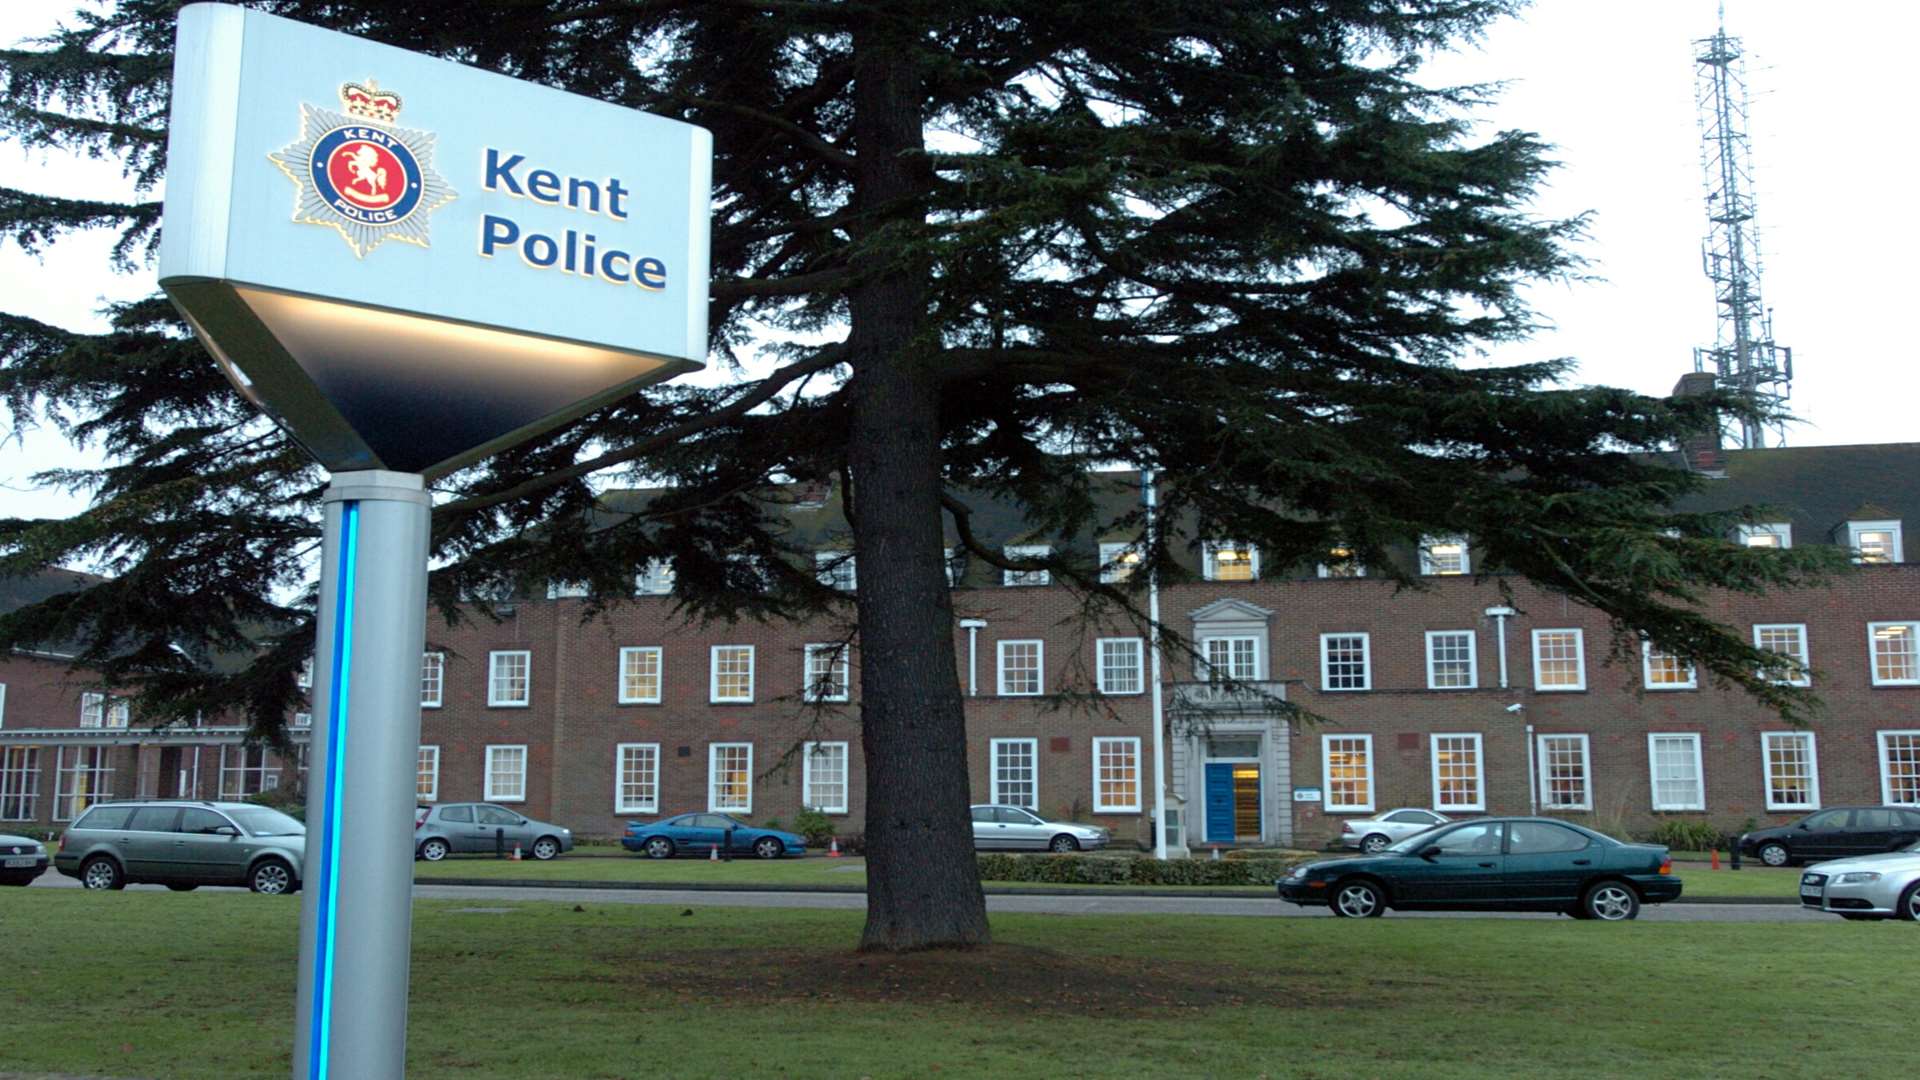 Kent Police headquarters